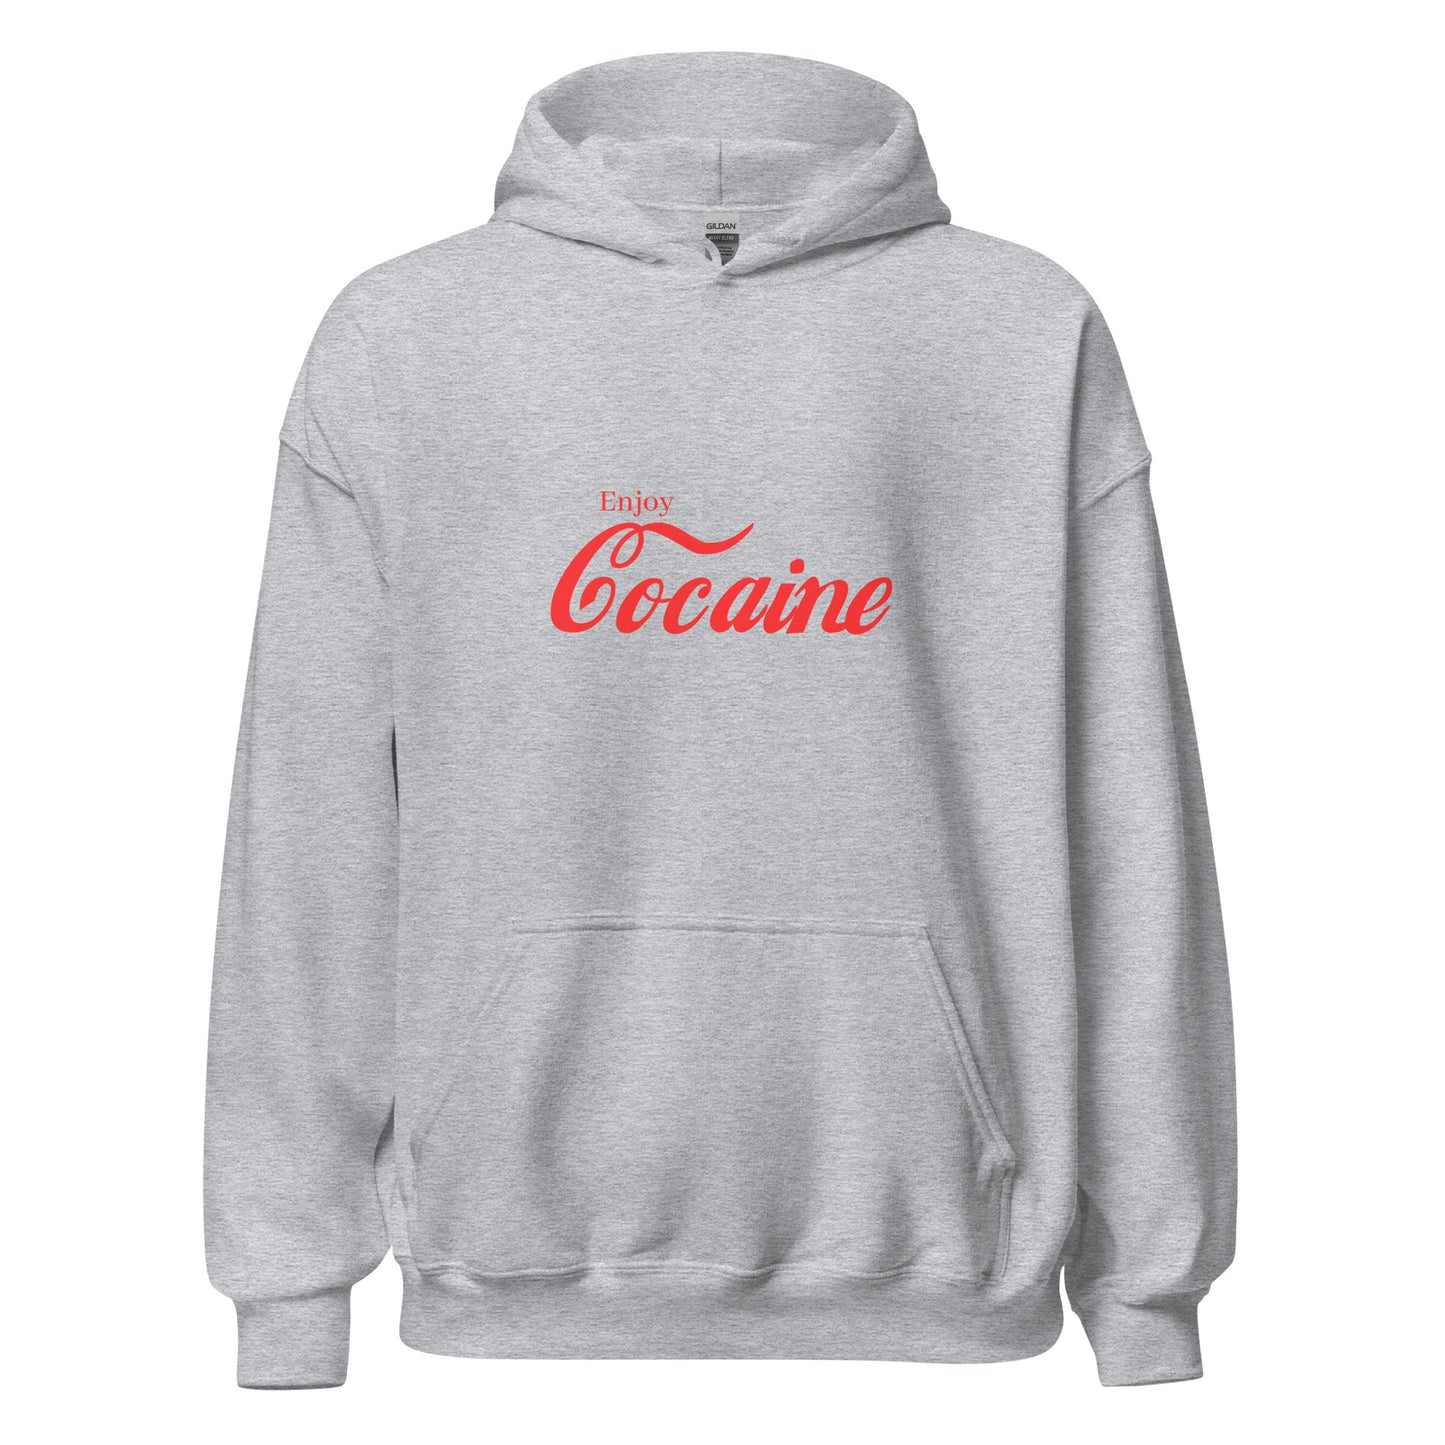 Enjoy Coke Hoodie